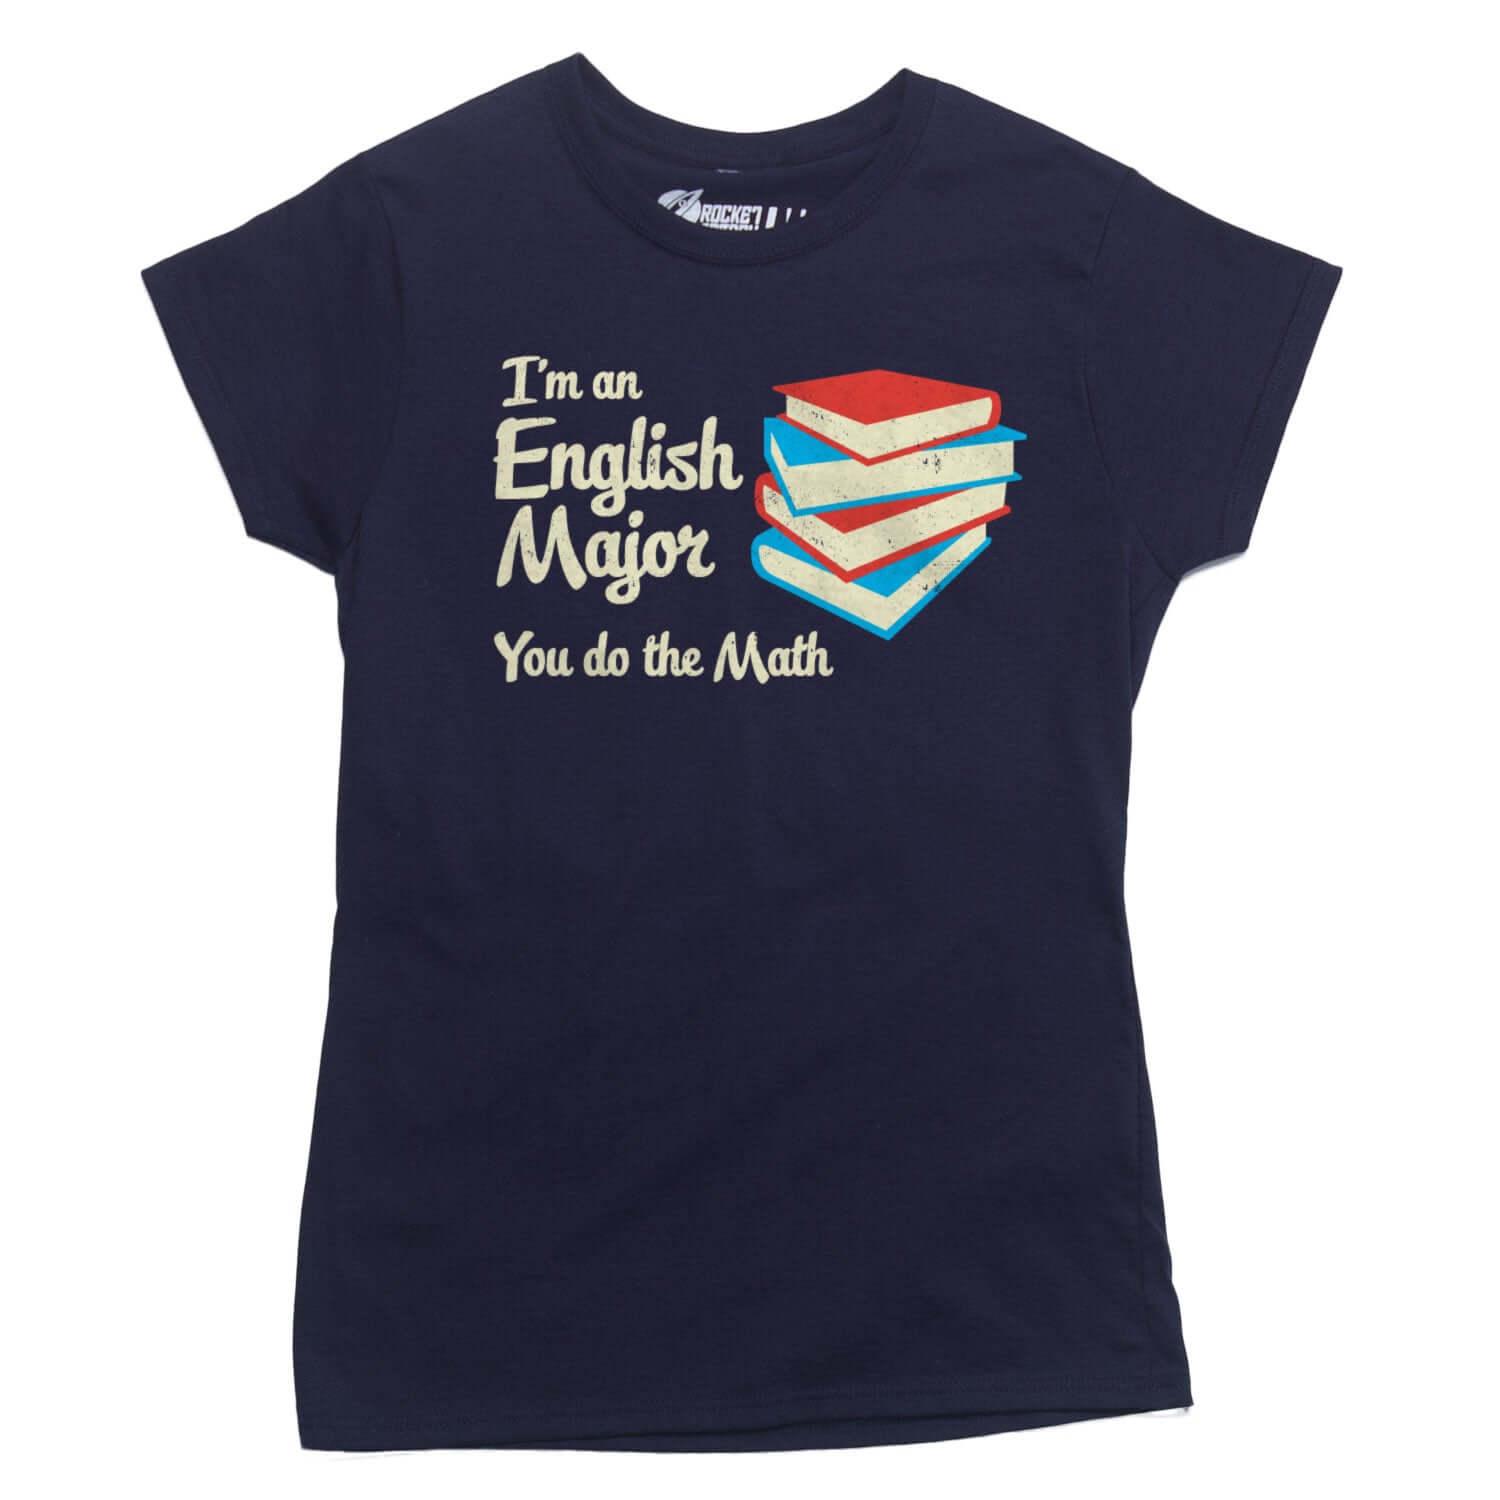 I'm an English Major You Do The Math T-shirt - Rocket Factory Apparel